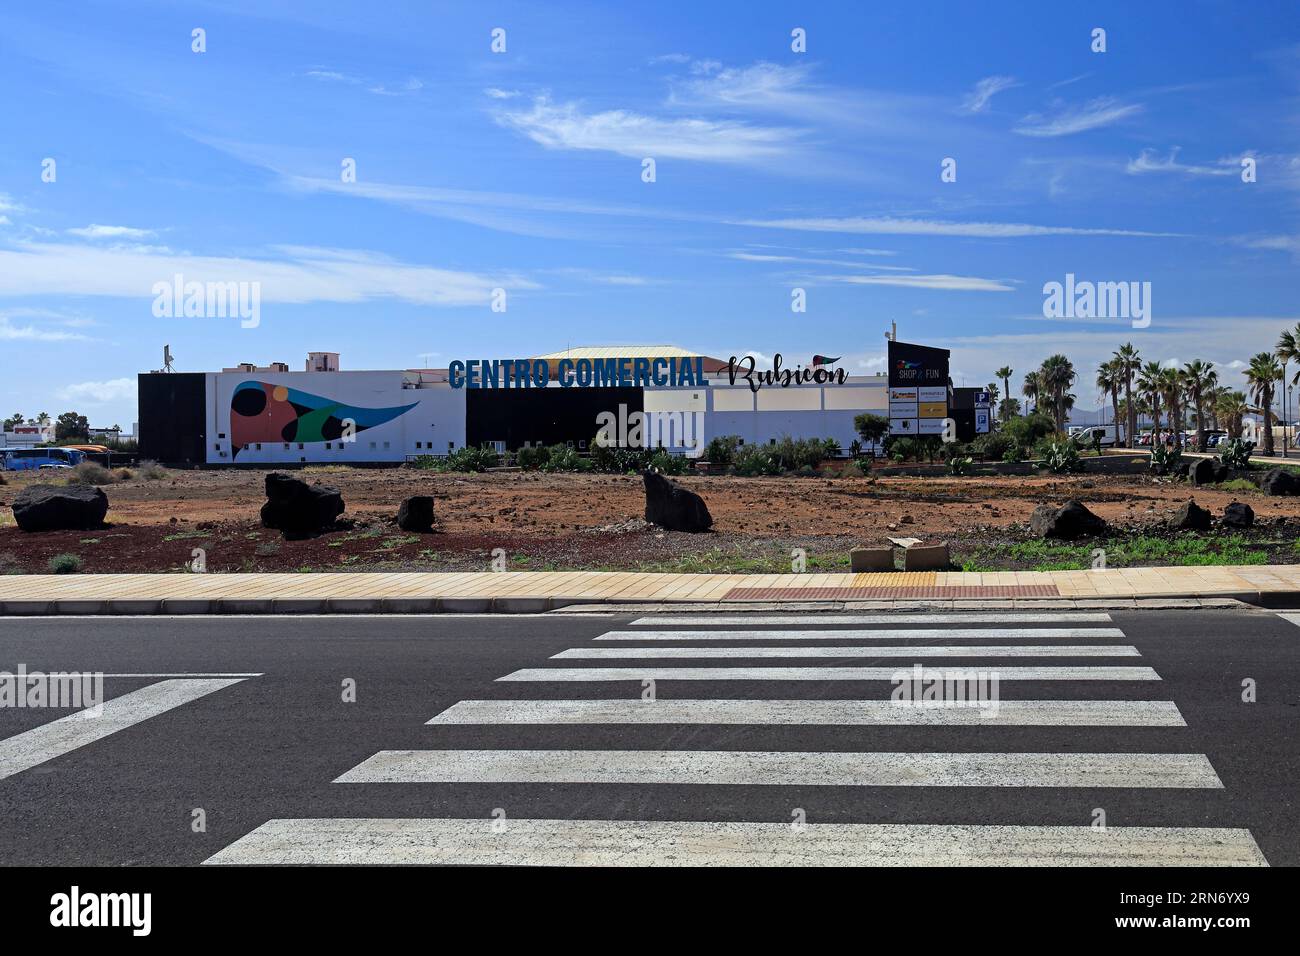 Centro commercial Rubicon - Centre commercial Rubicon Marina - Shap and Fun, Lanzarote, îles Canaries. Banque D'Images